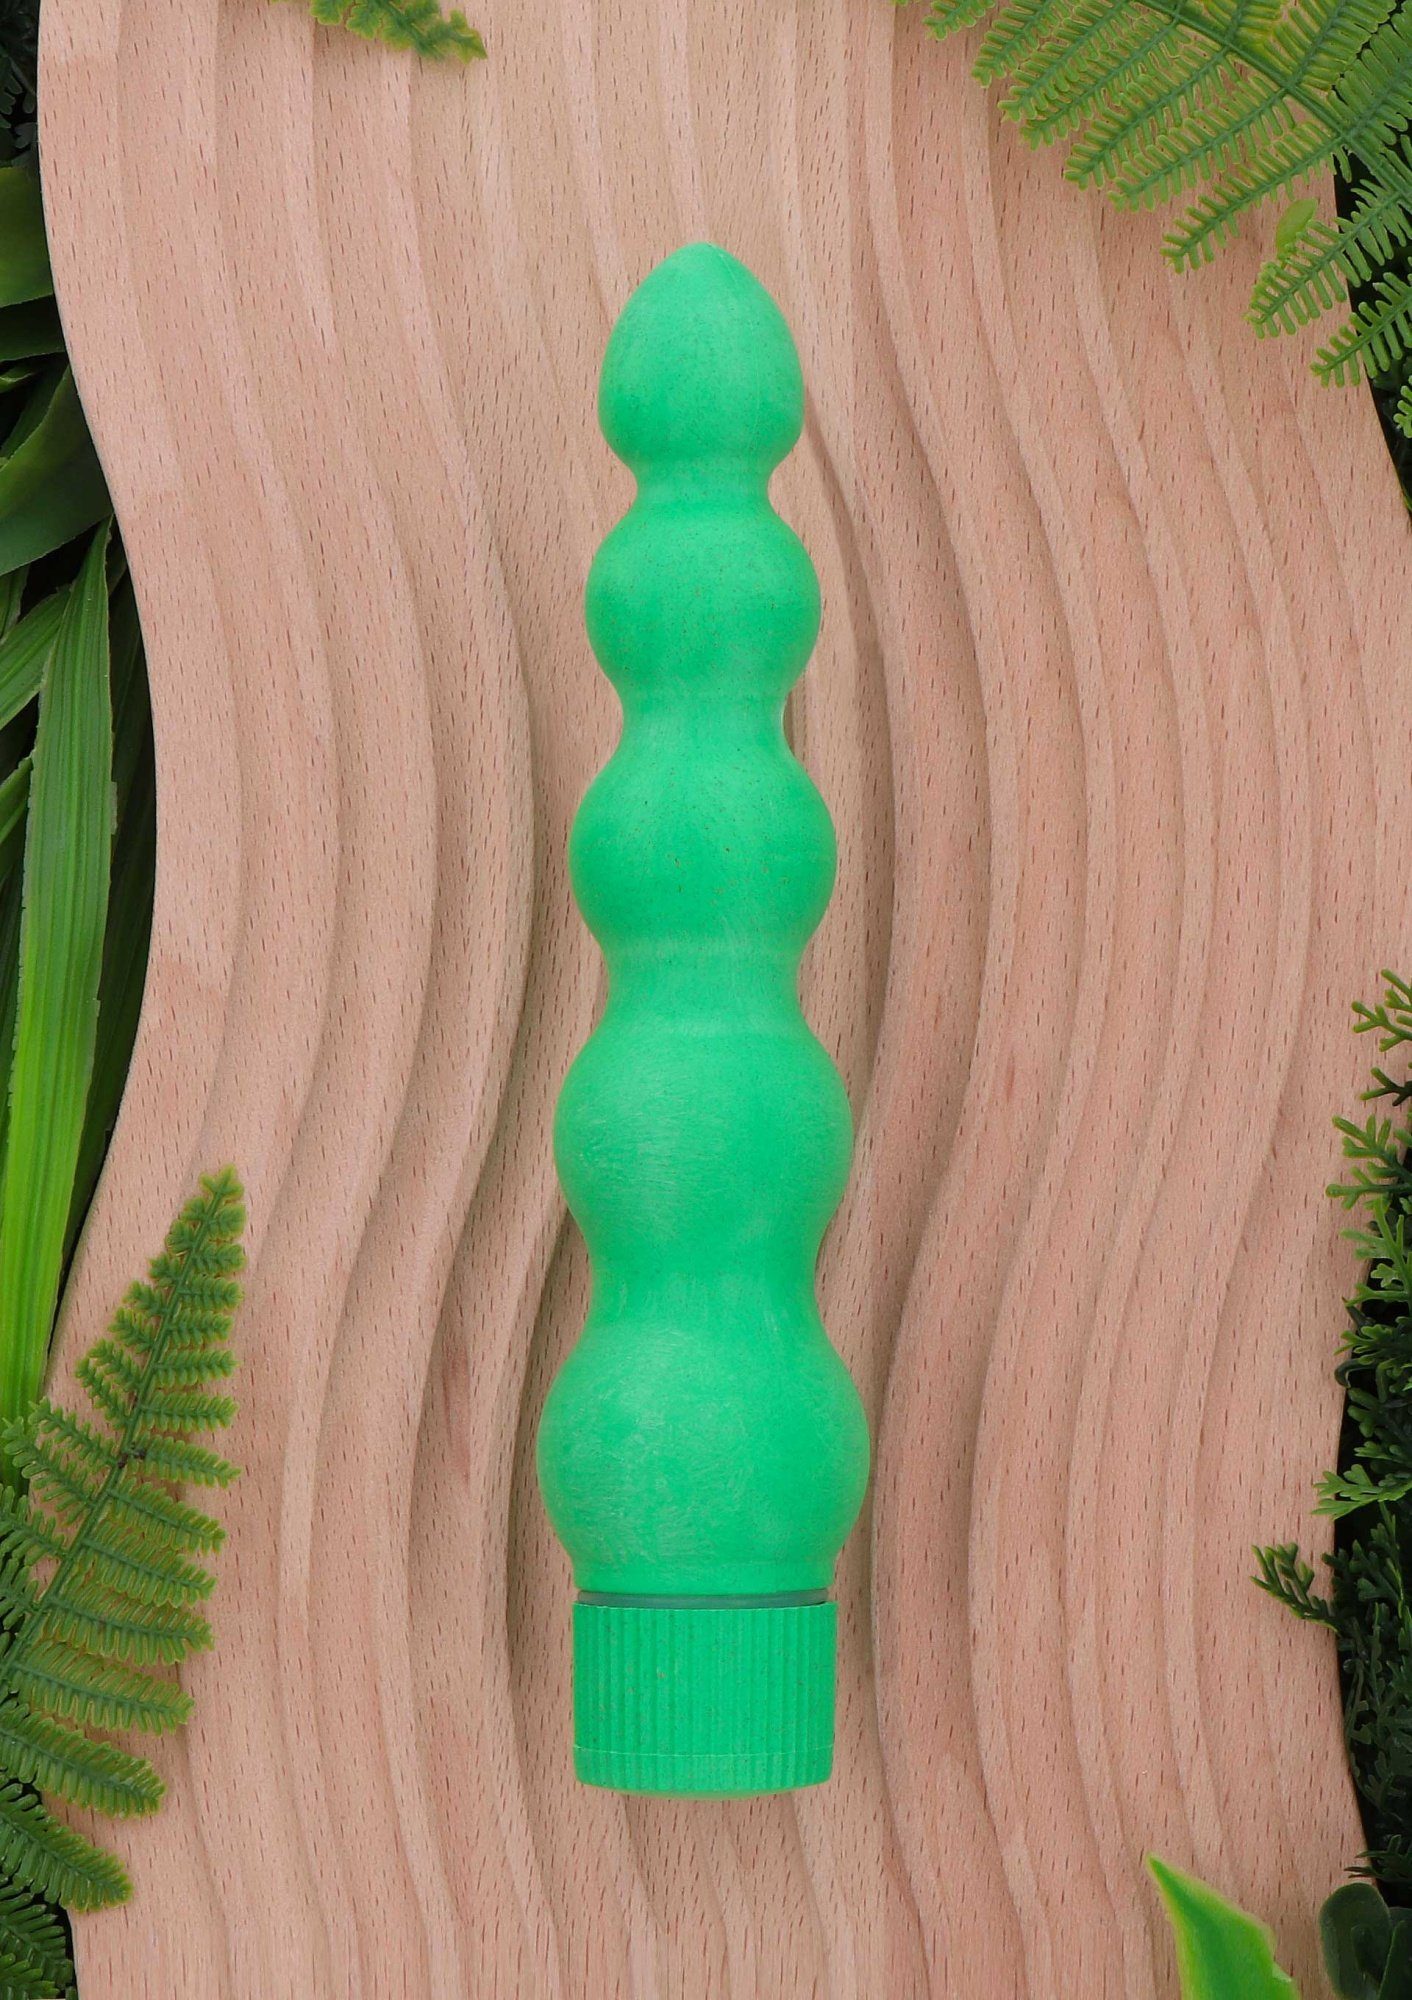 grün biologisch Vibrator abbaubar FUCK GREEN - % vegan 100 Vibrator